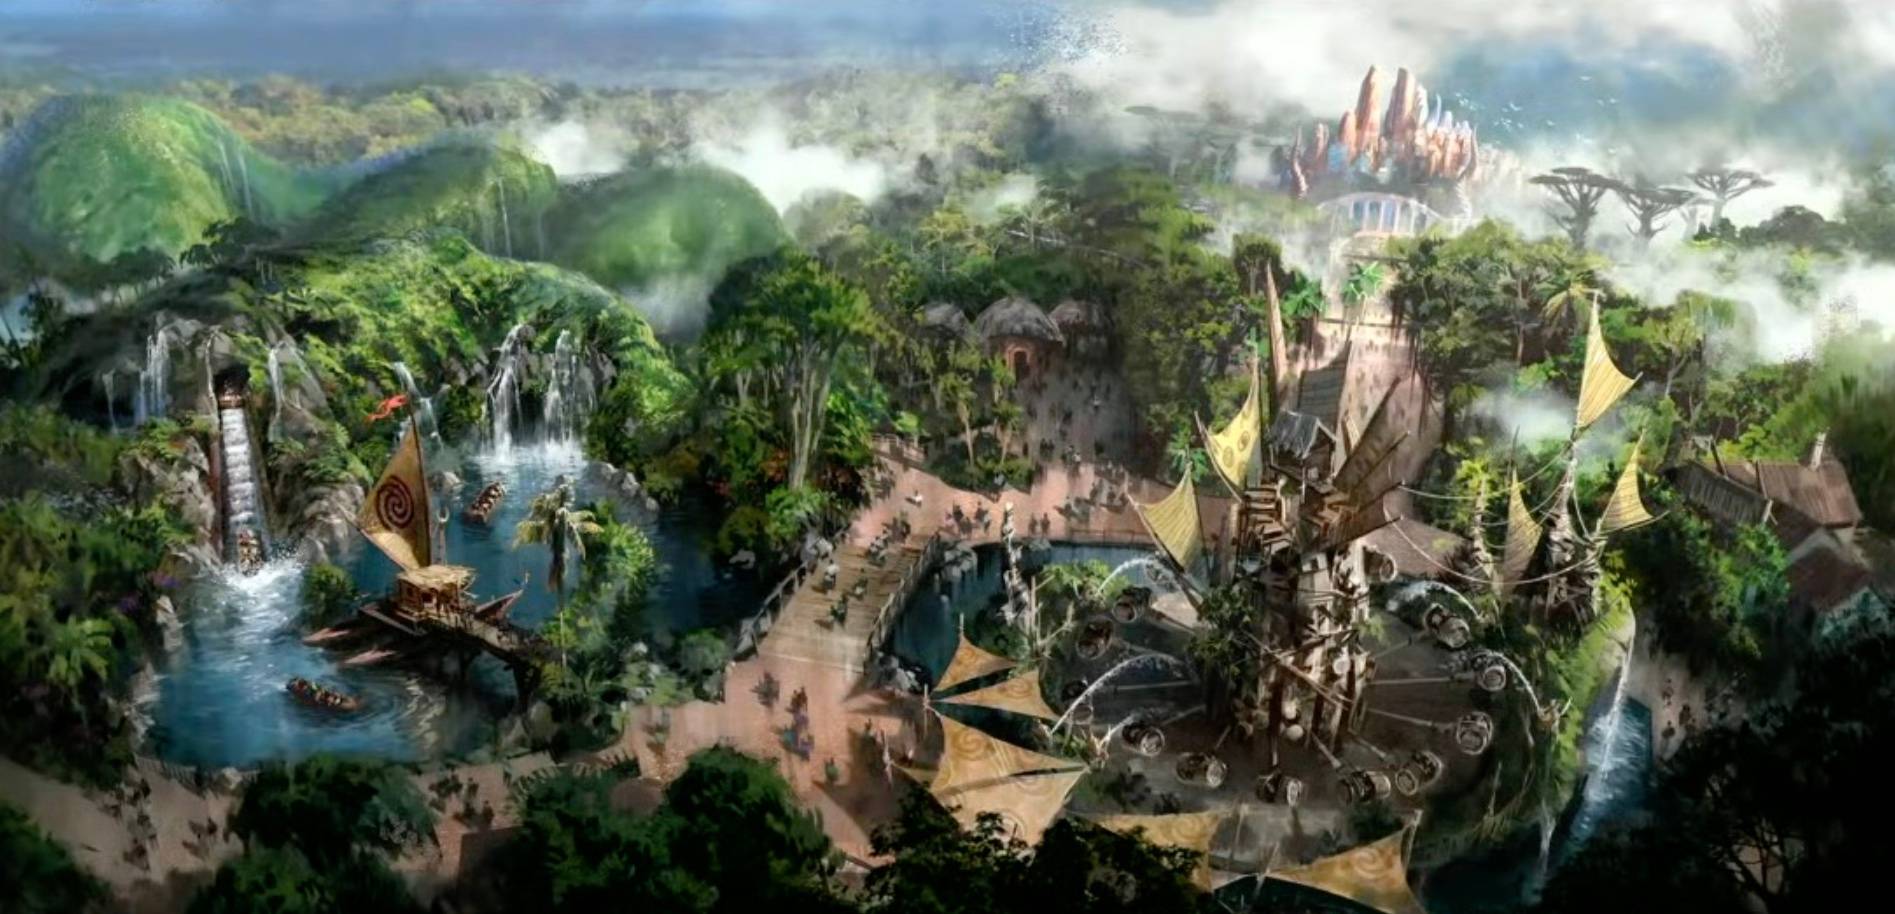 Disney Parks head Josh D'Amaro shares Zootopia and Moana Blue Sky concepts for Disney's Animal Kingdom